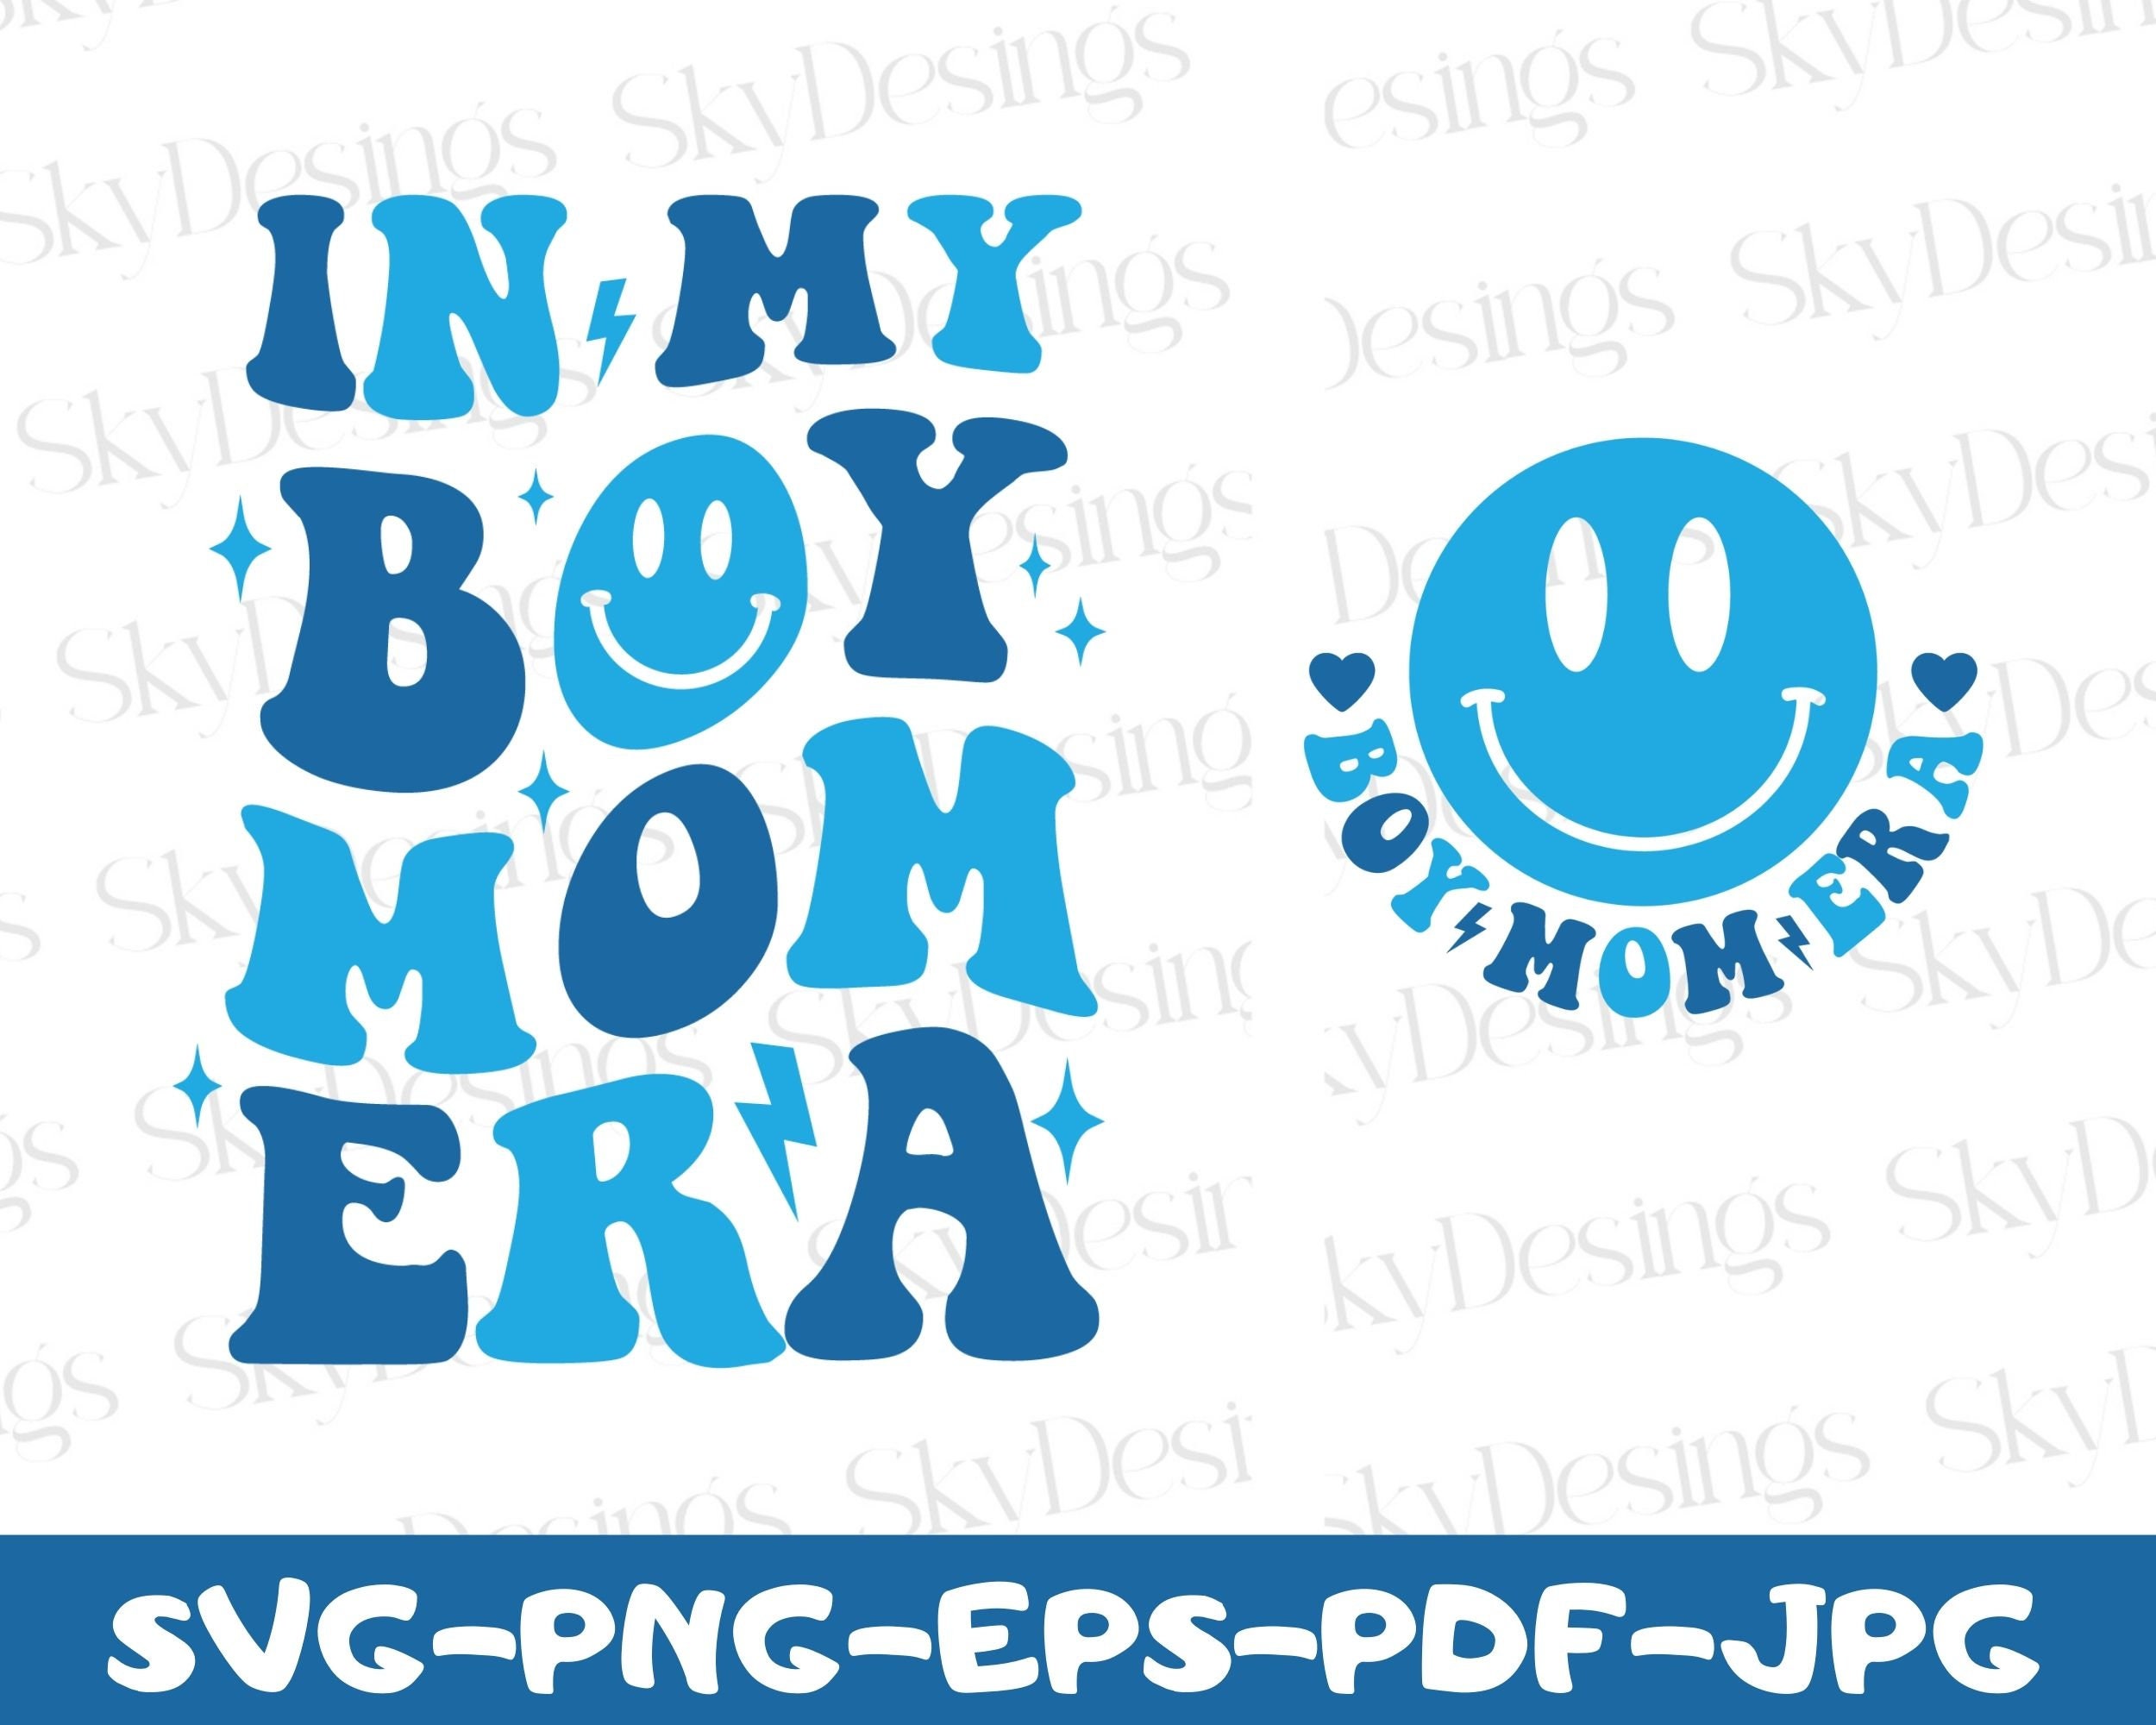 Boymom Gift Guide - Gift ideas for moms of boys - Mom vs the Boys